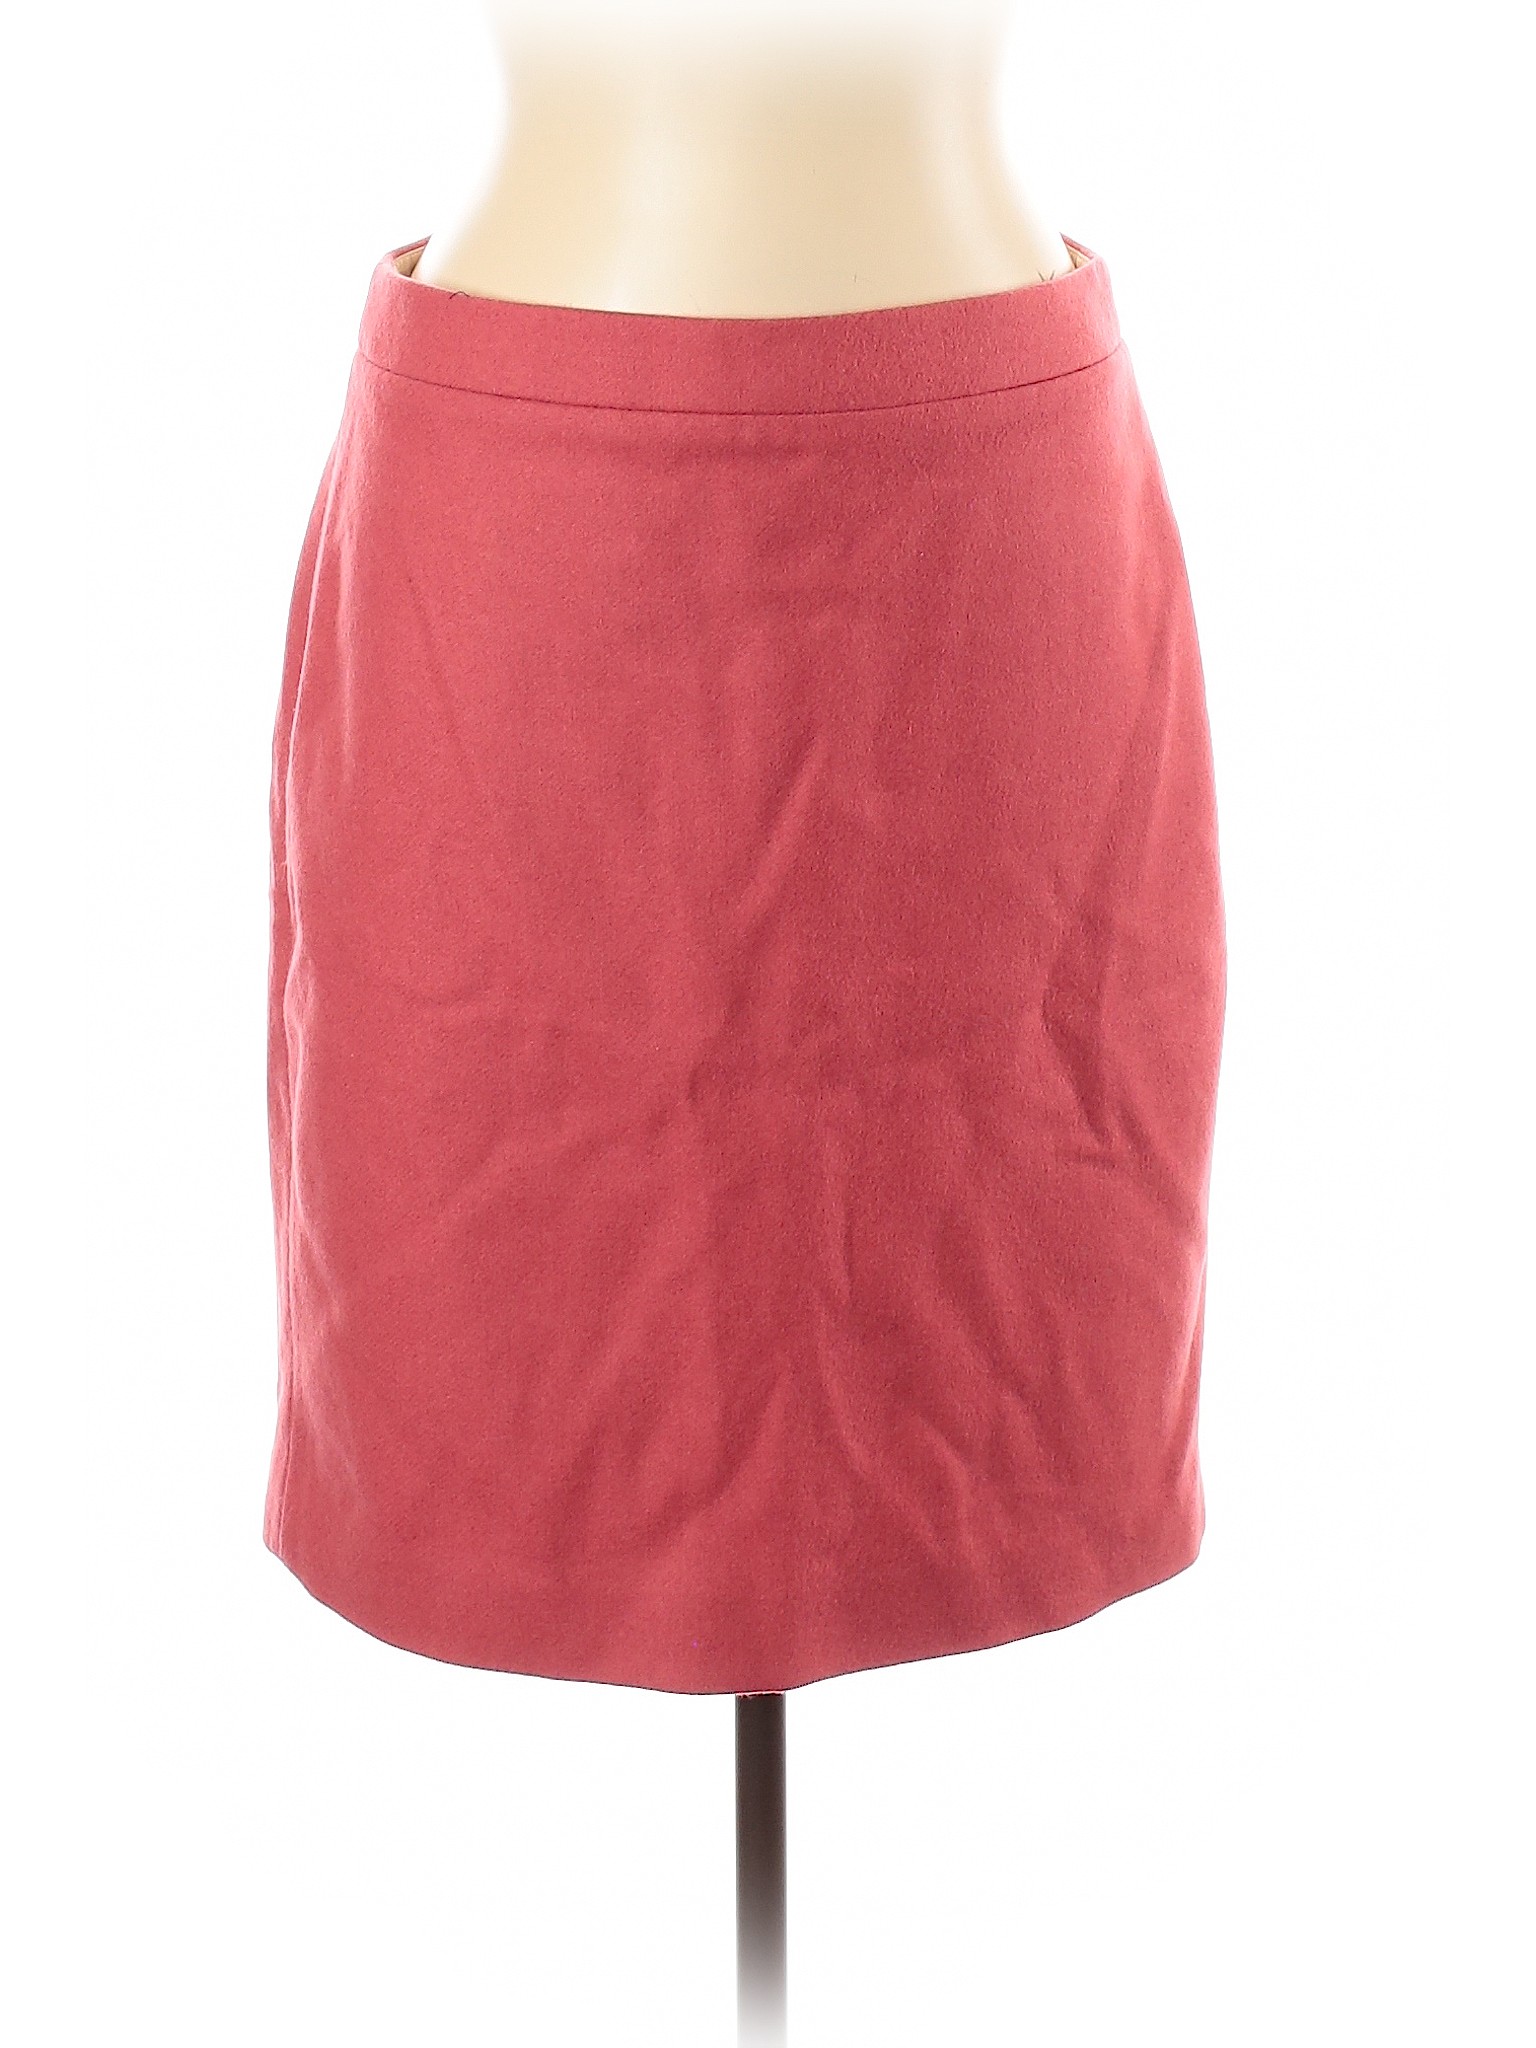 J.Crew Factory Store Women Pink Wool Skirt 10 | eBay